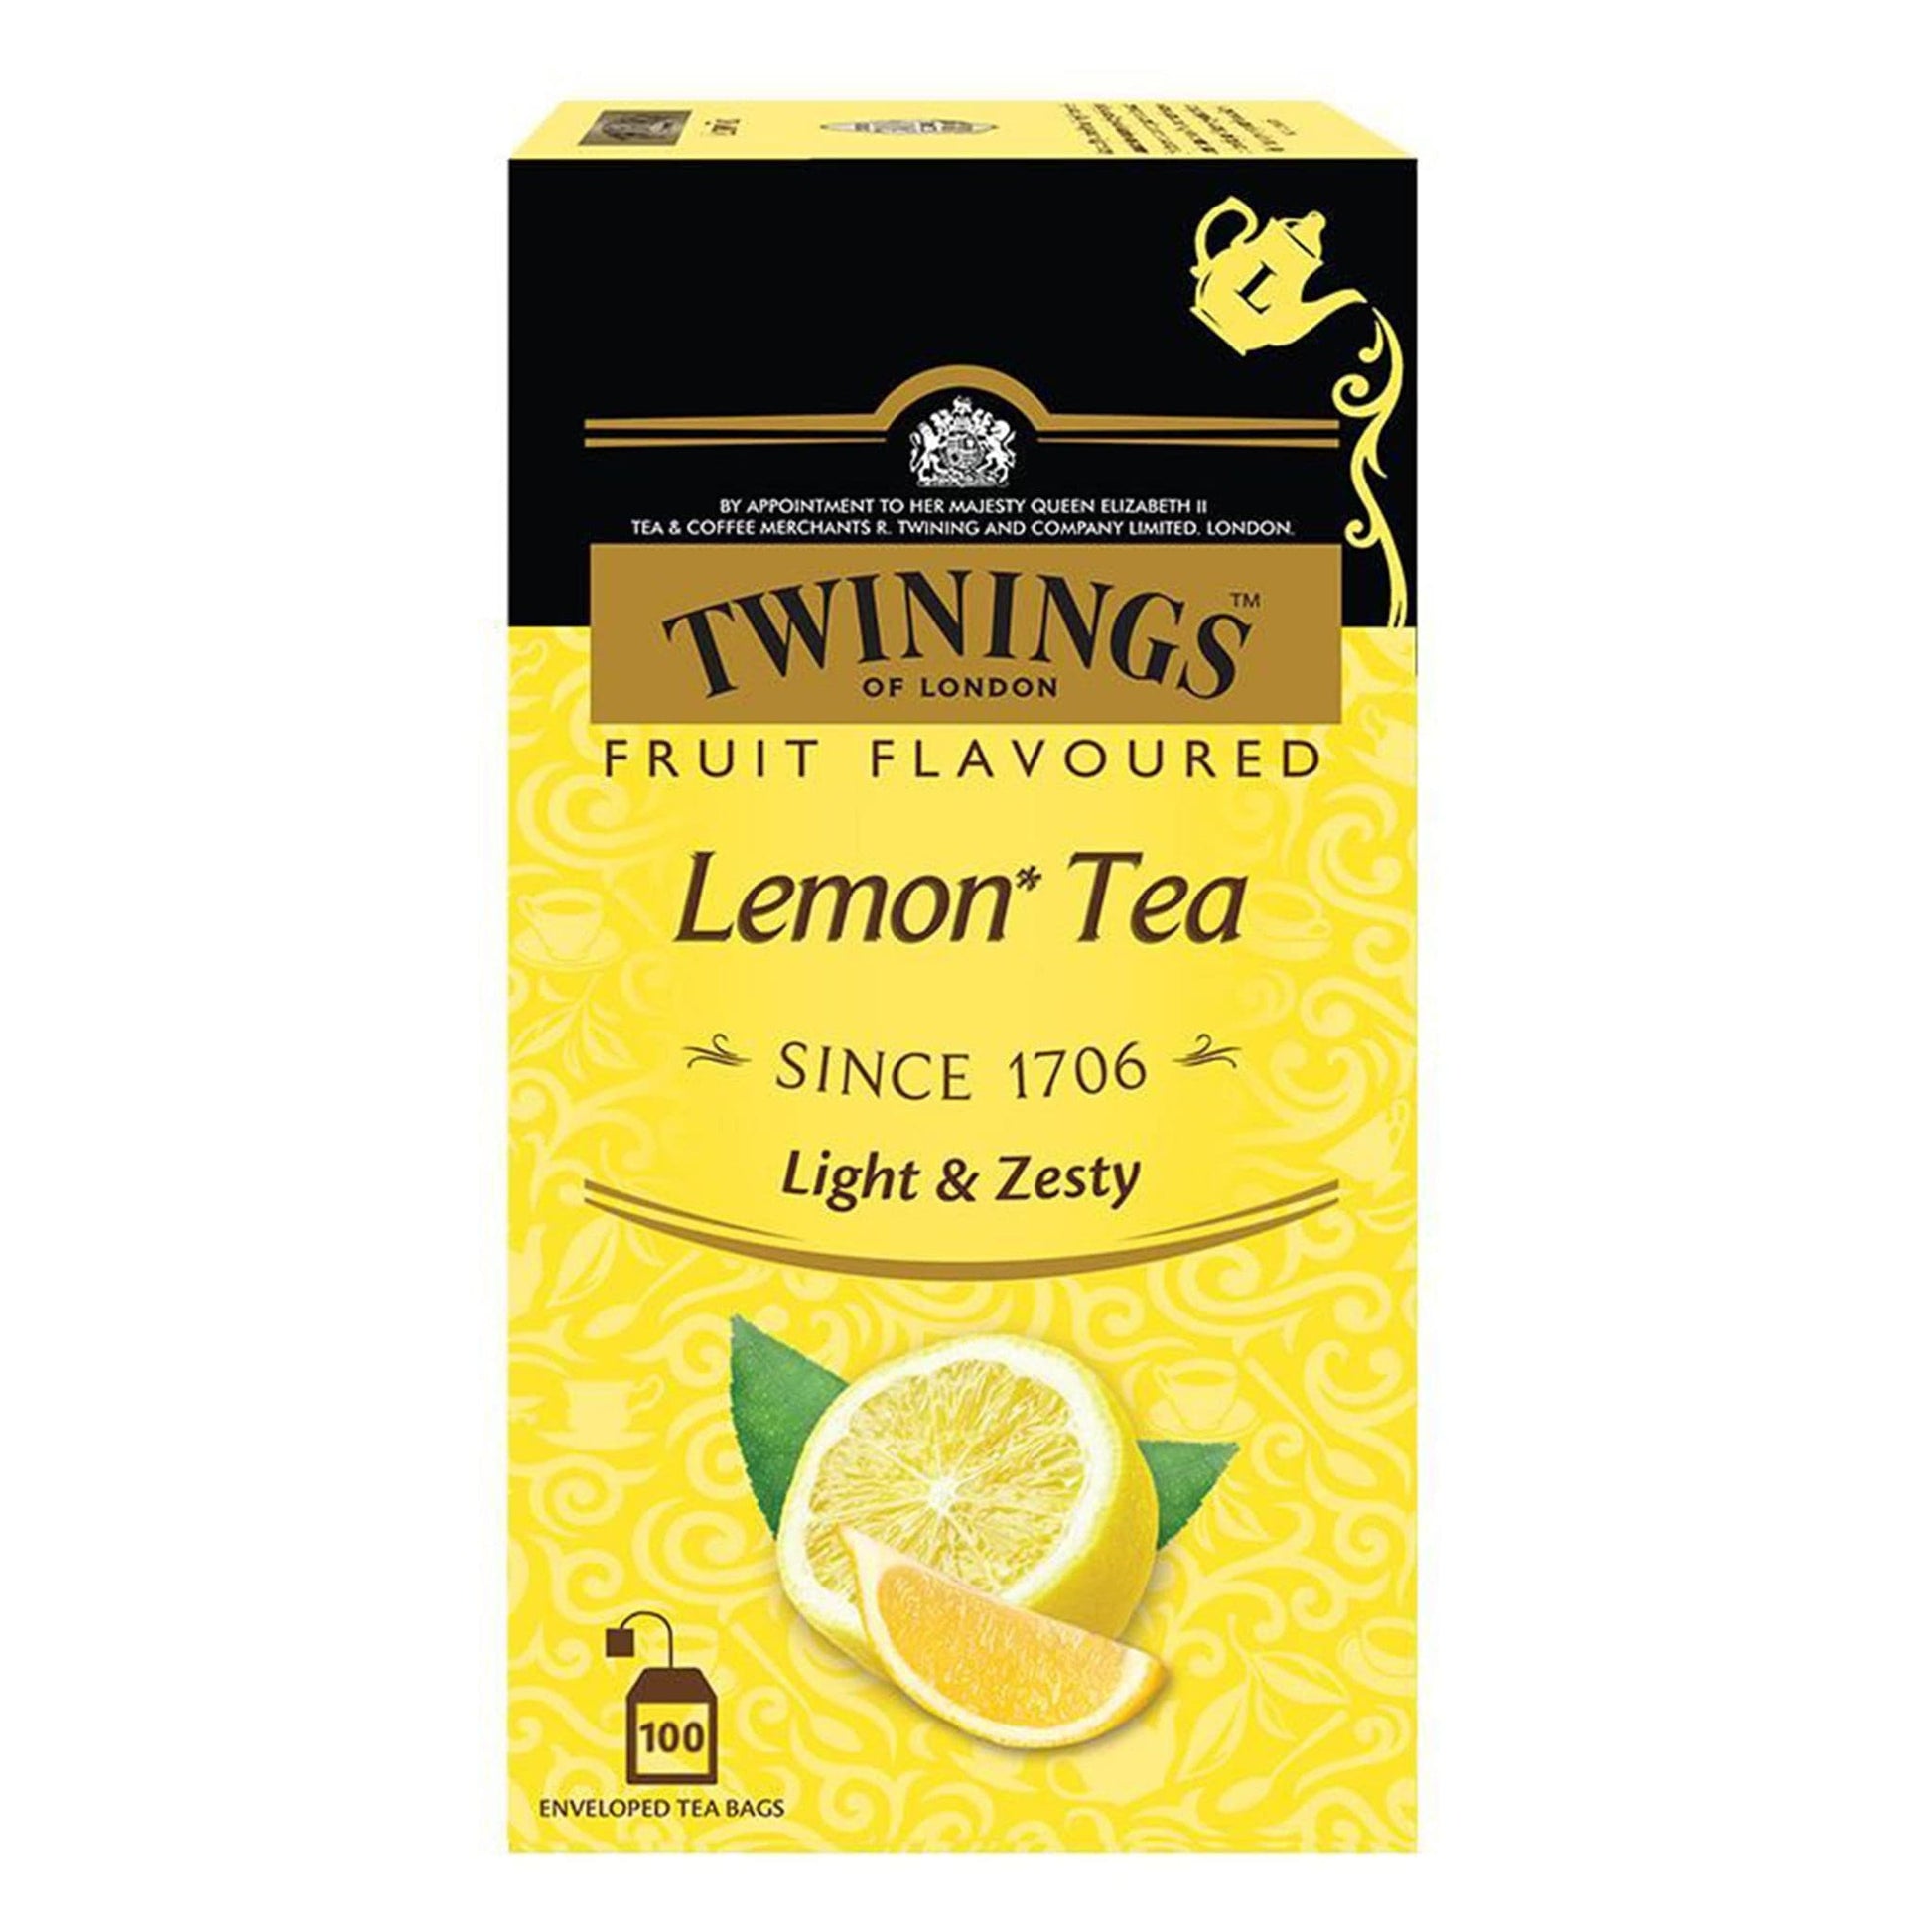 twinings fruit flavored lemon tea.